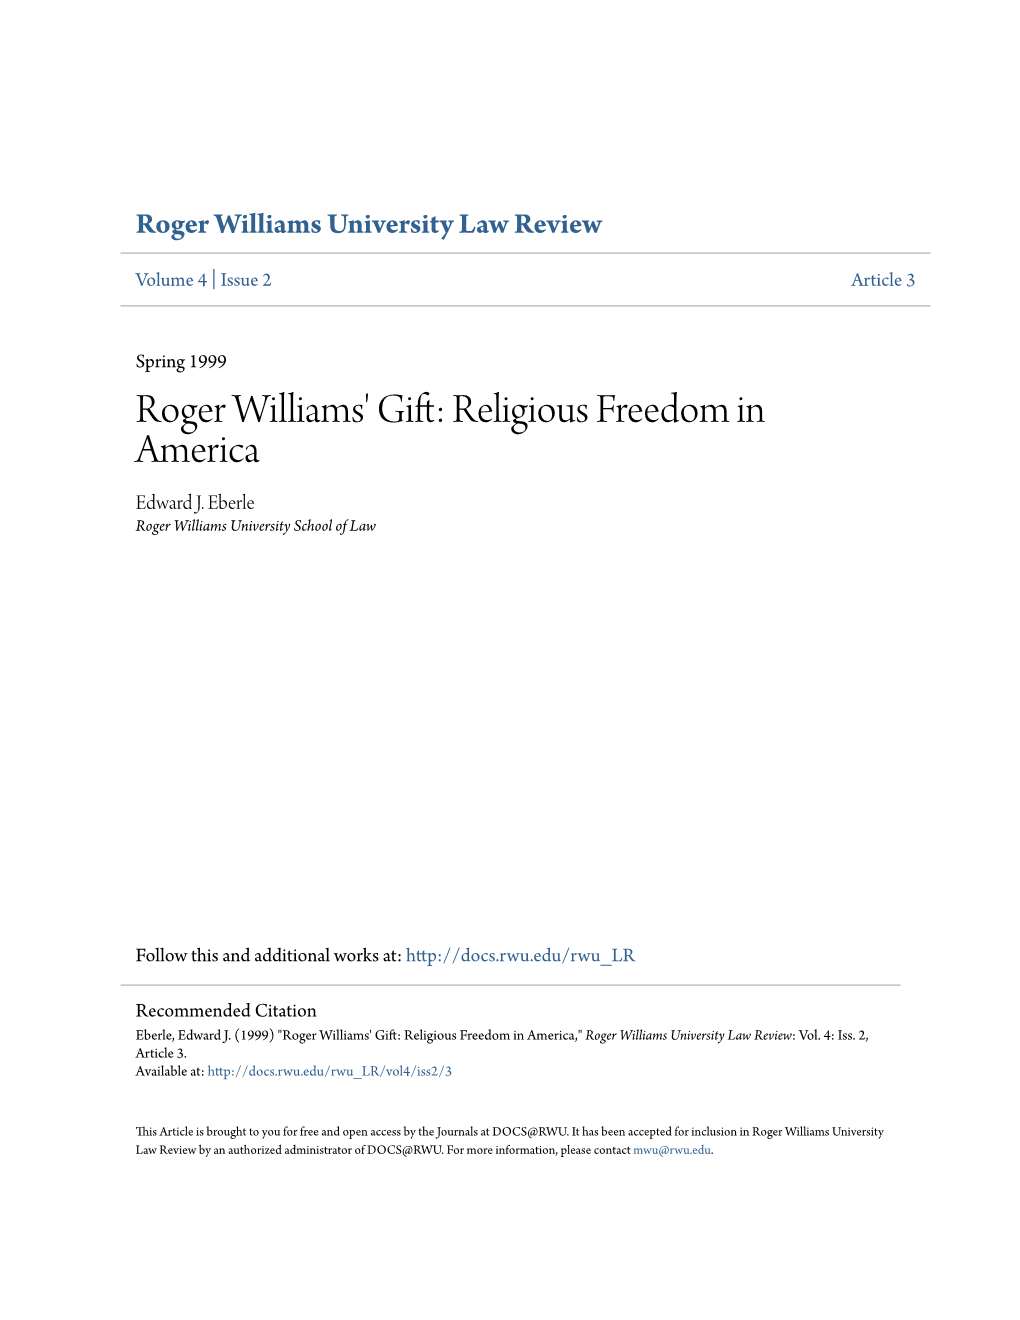 Religious Freedom in America Edward J